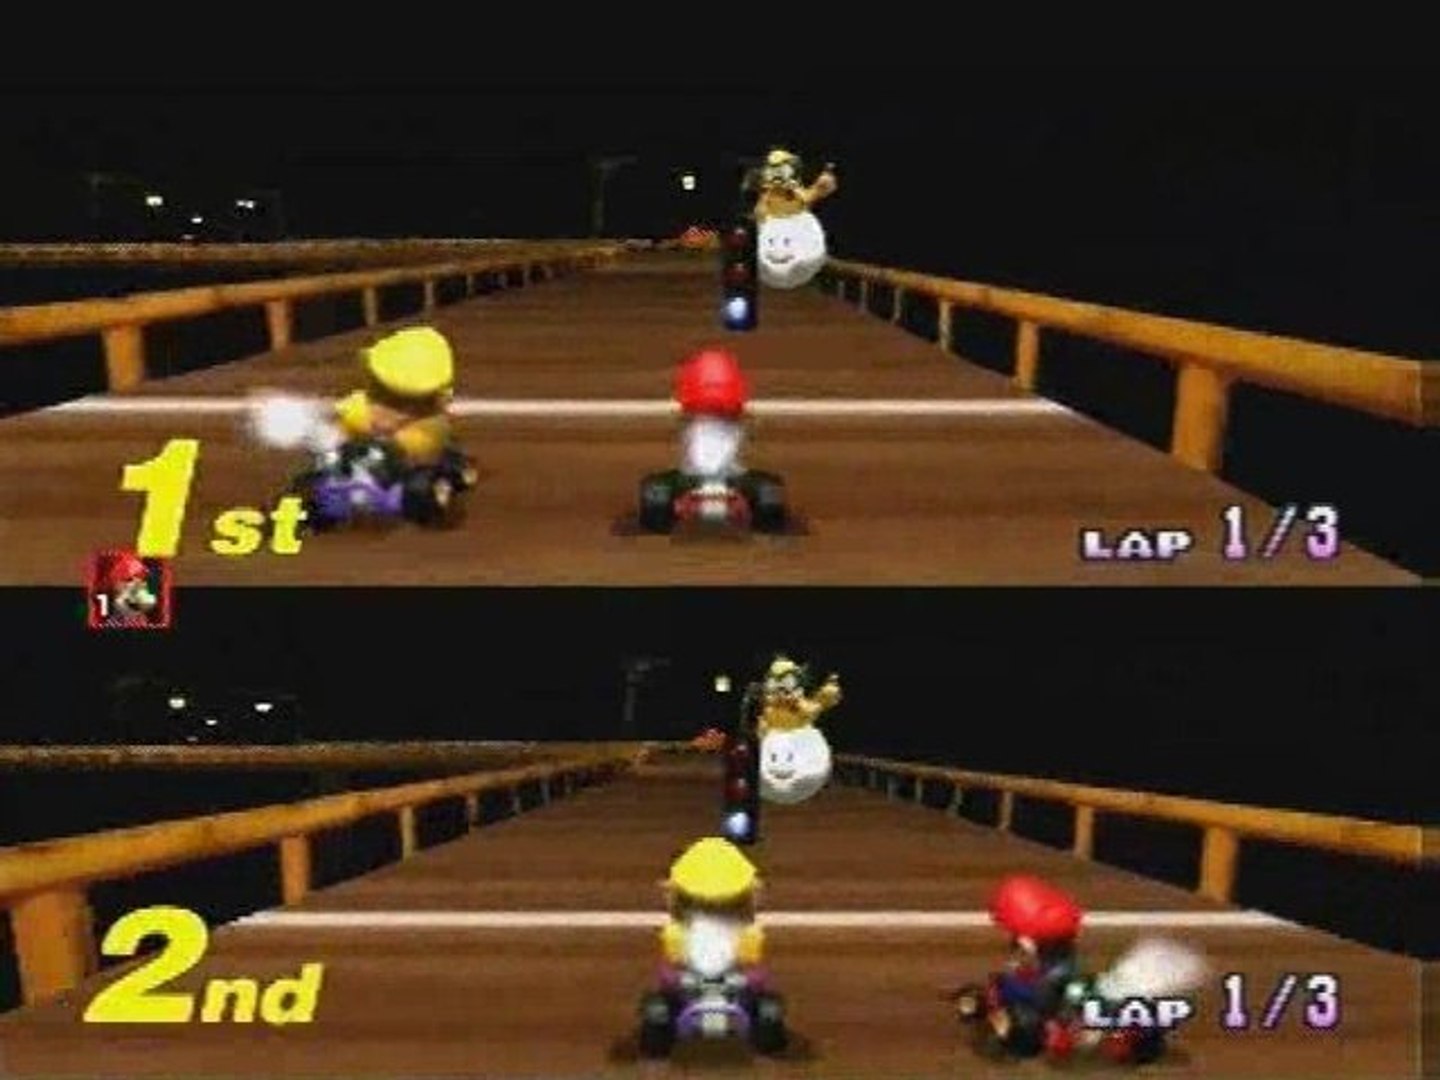 Mario Kart 64 Gameplay (No Commentary) - video Dailymotion